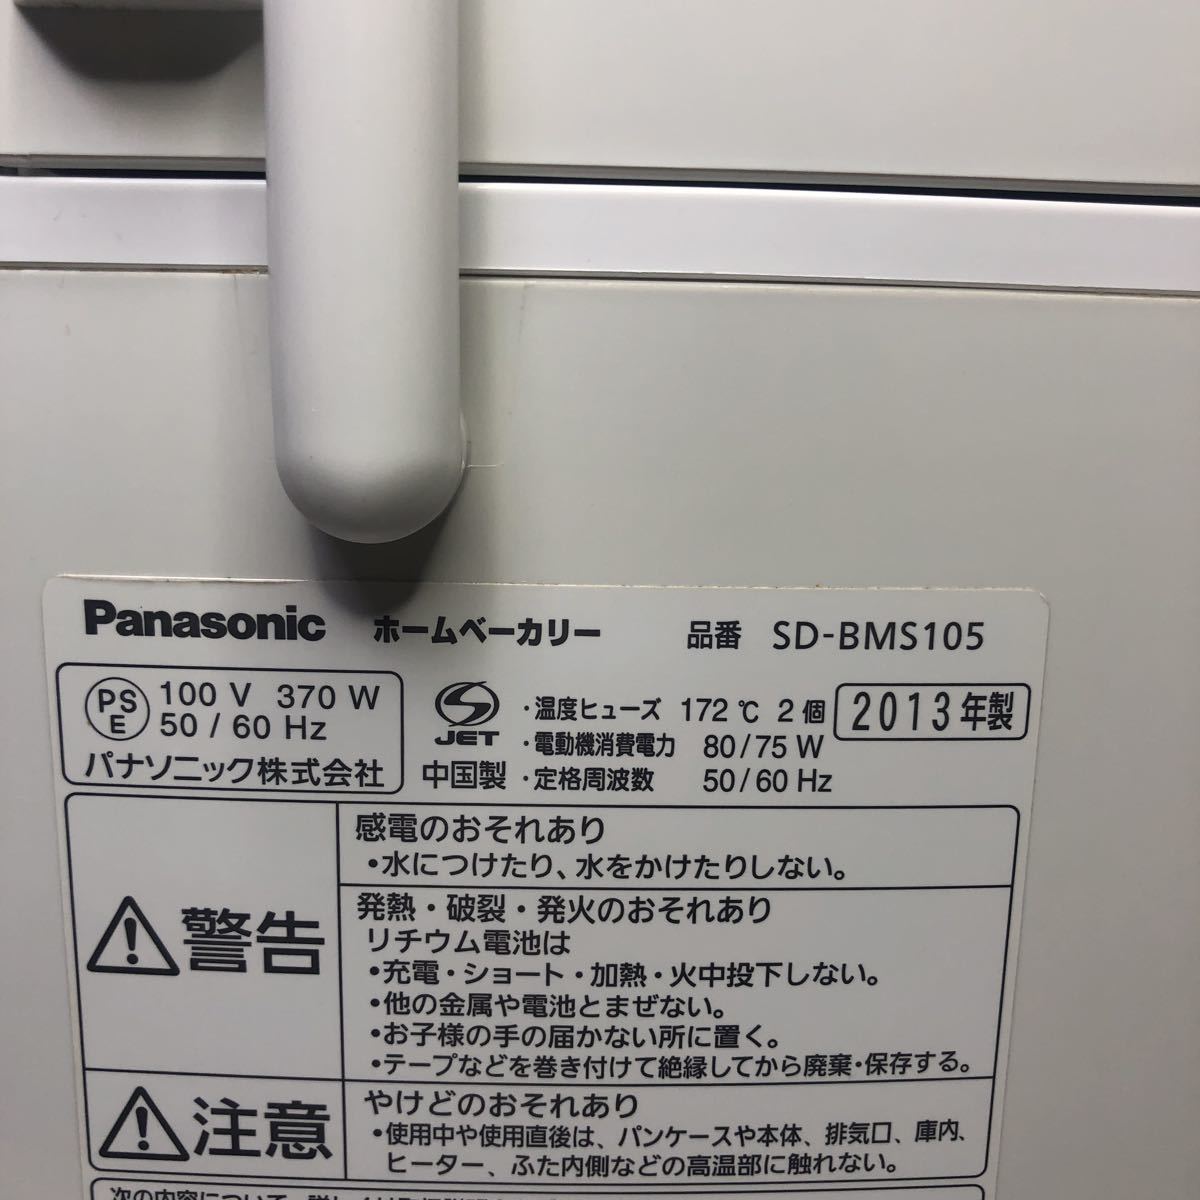 Panasonic ホームベーカリー SD-BMS105 (1斤 )パナソニック 家庭用パン焼き機の画像9